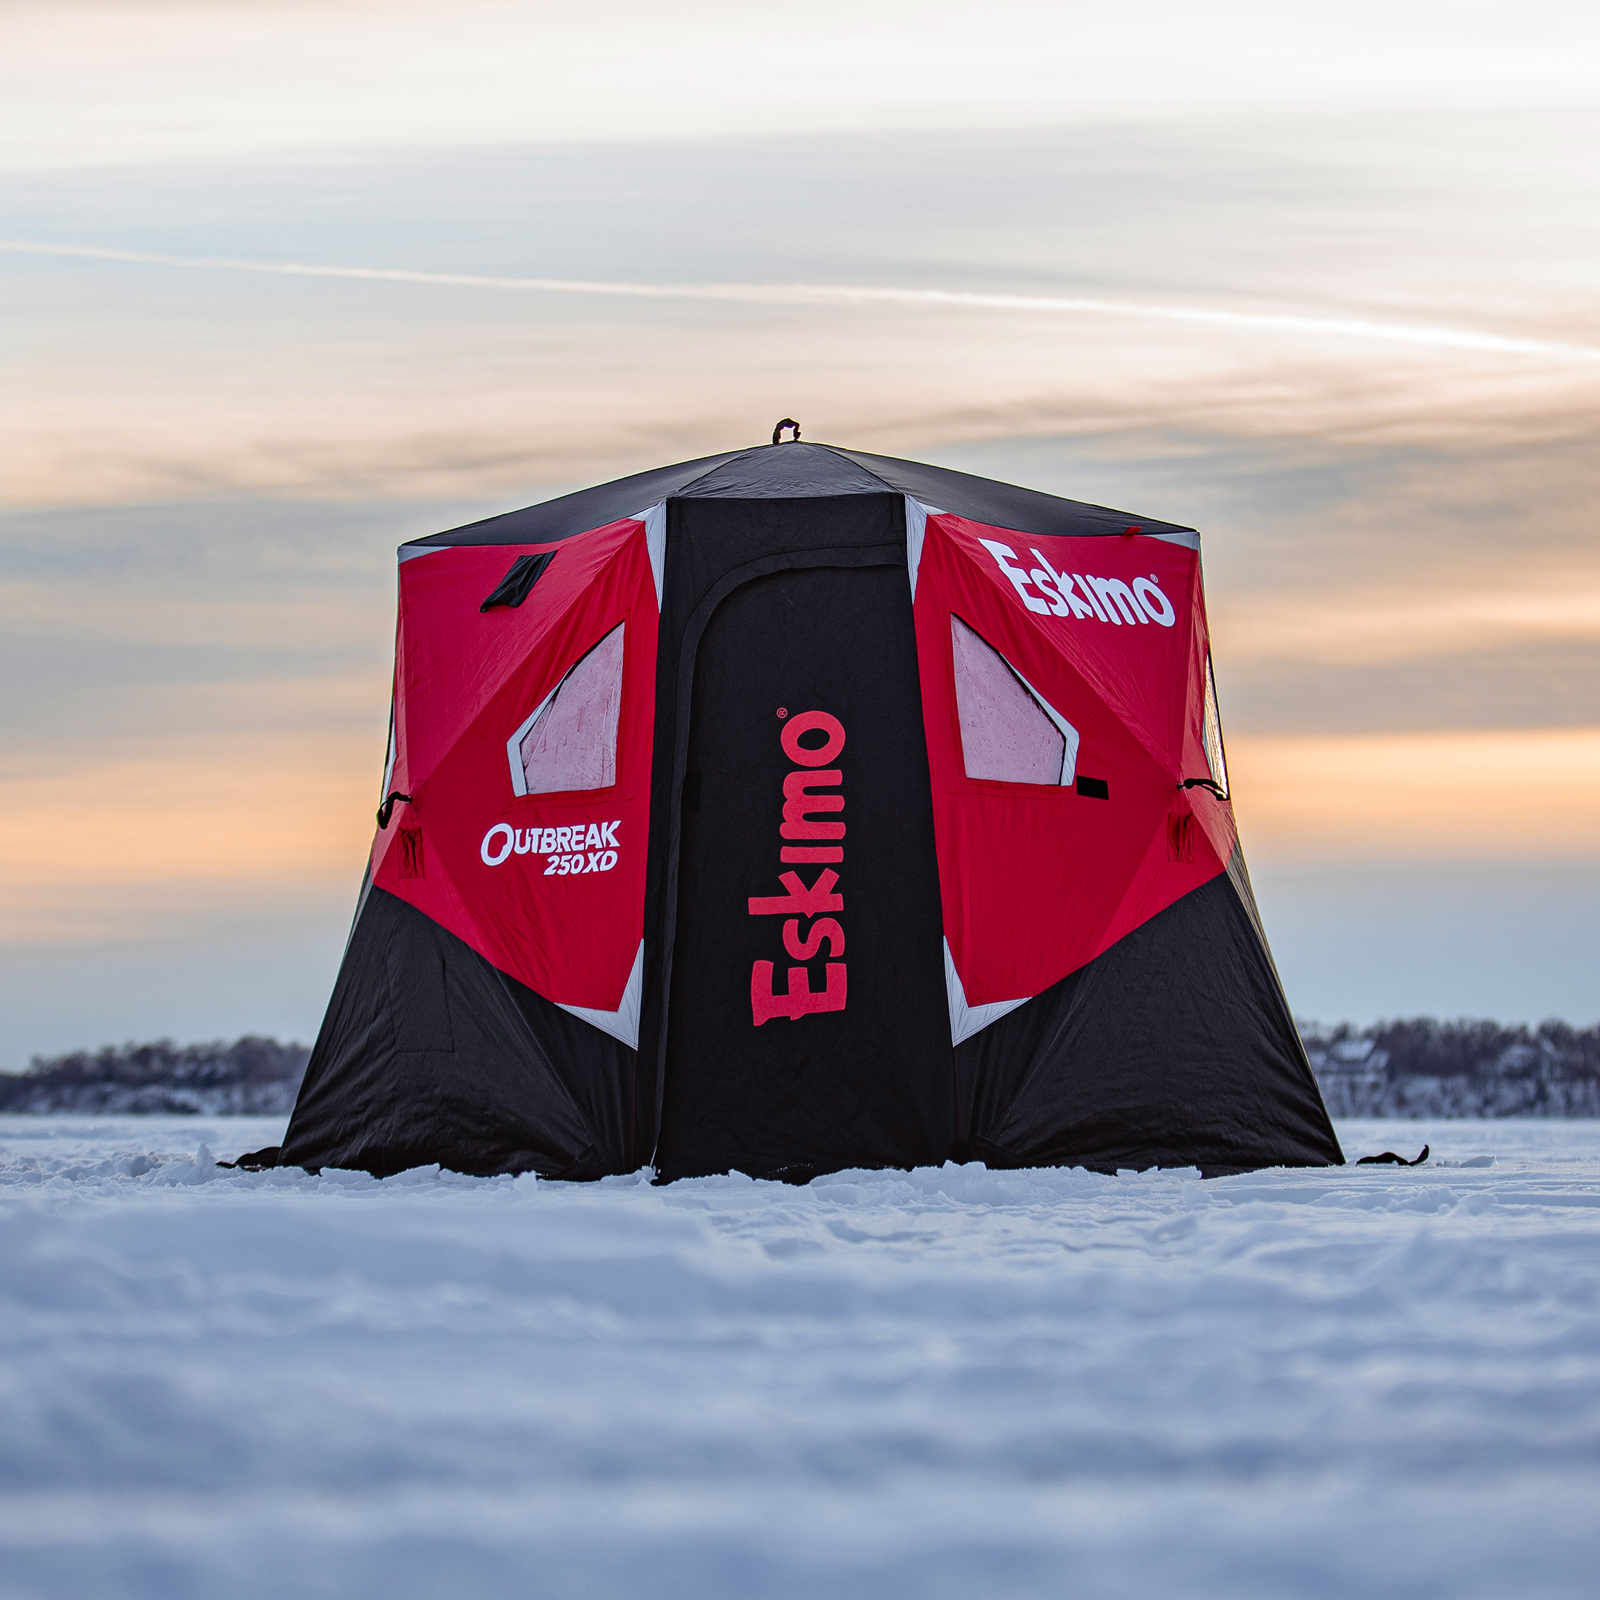 Eskimo tent